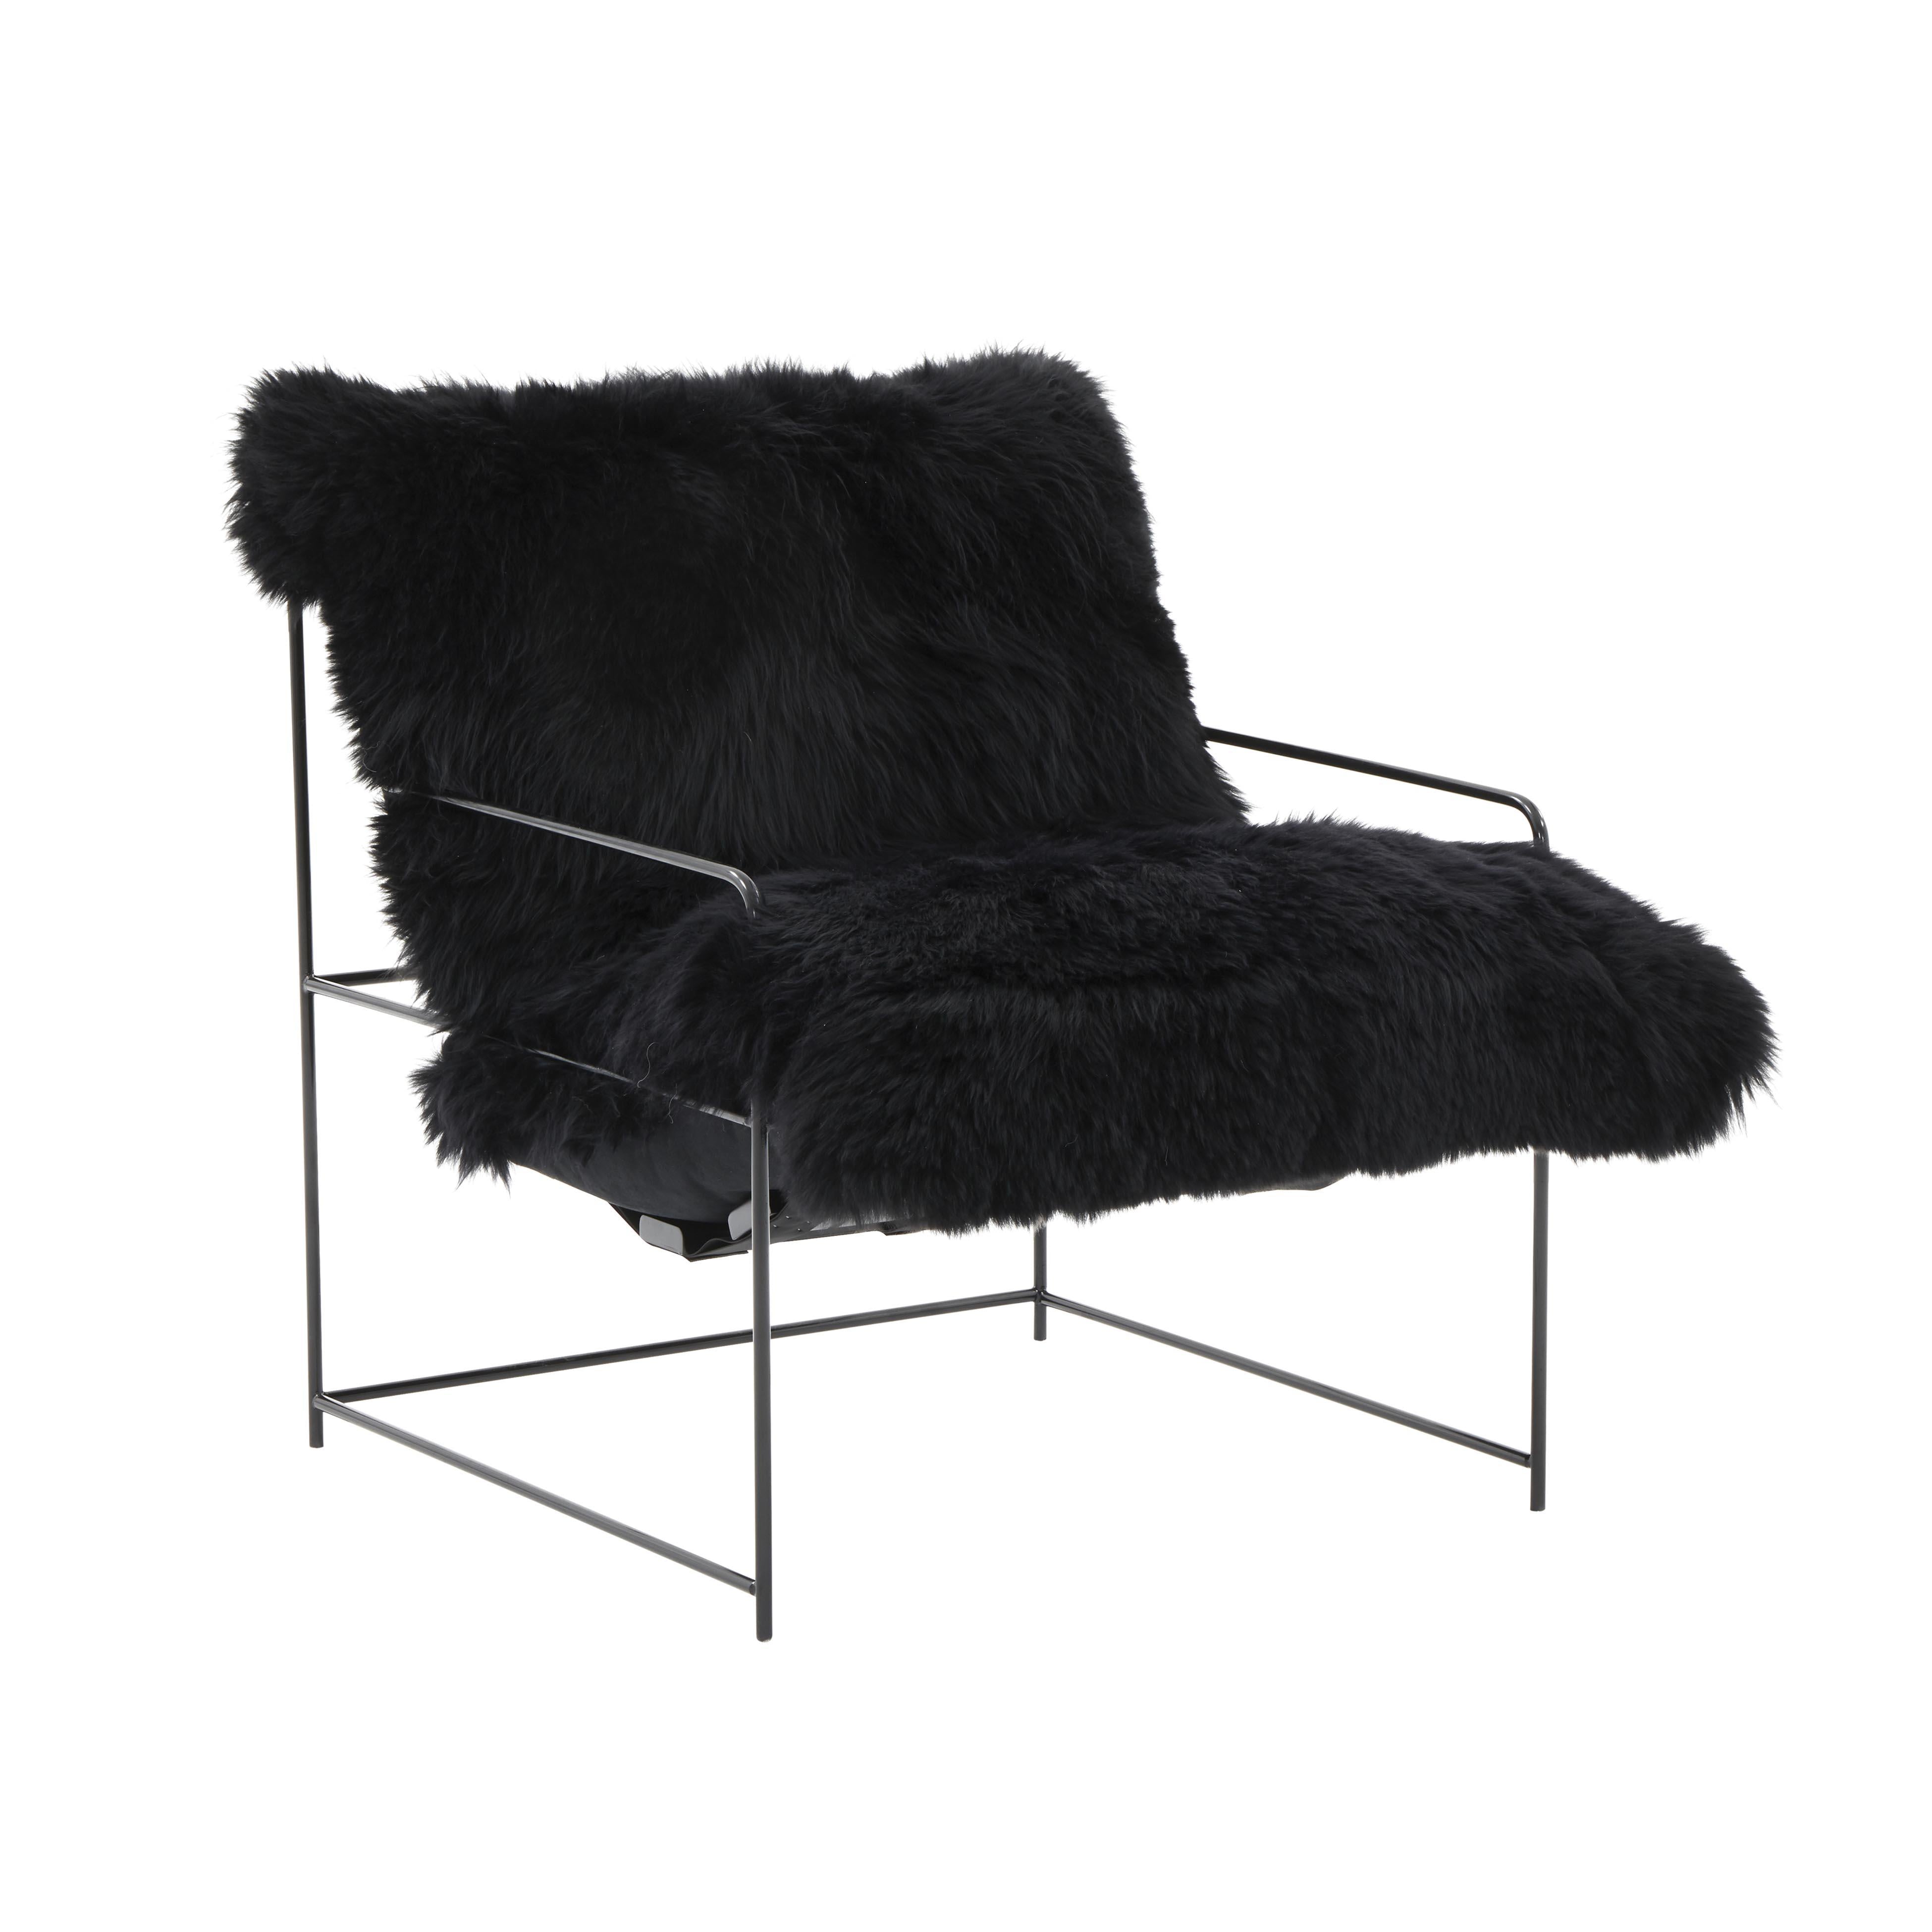 Tov Furniture Accent Chairs - Kimi Black Genuine Sheepskin Chair